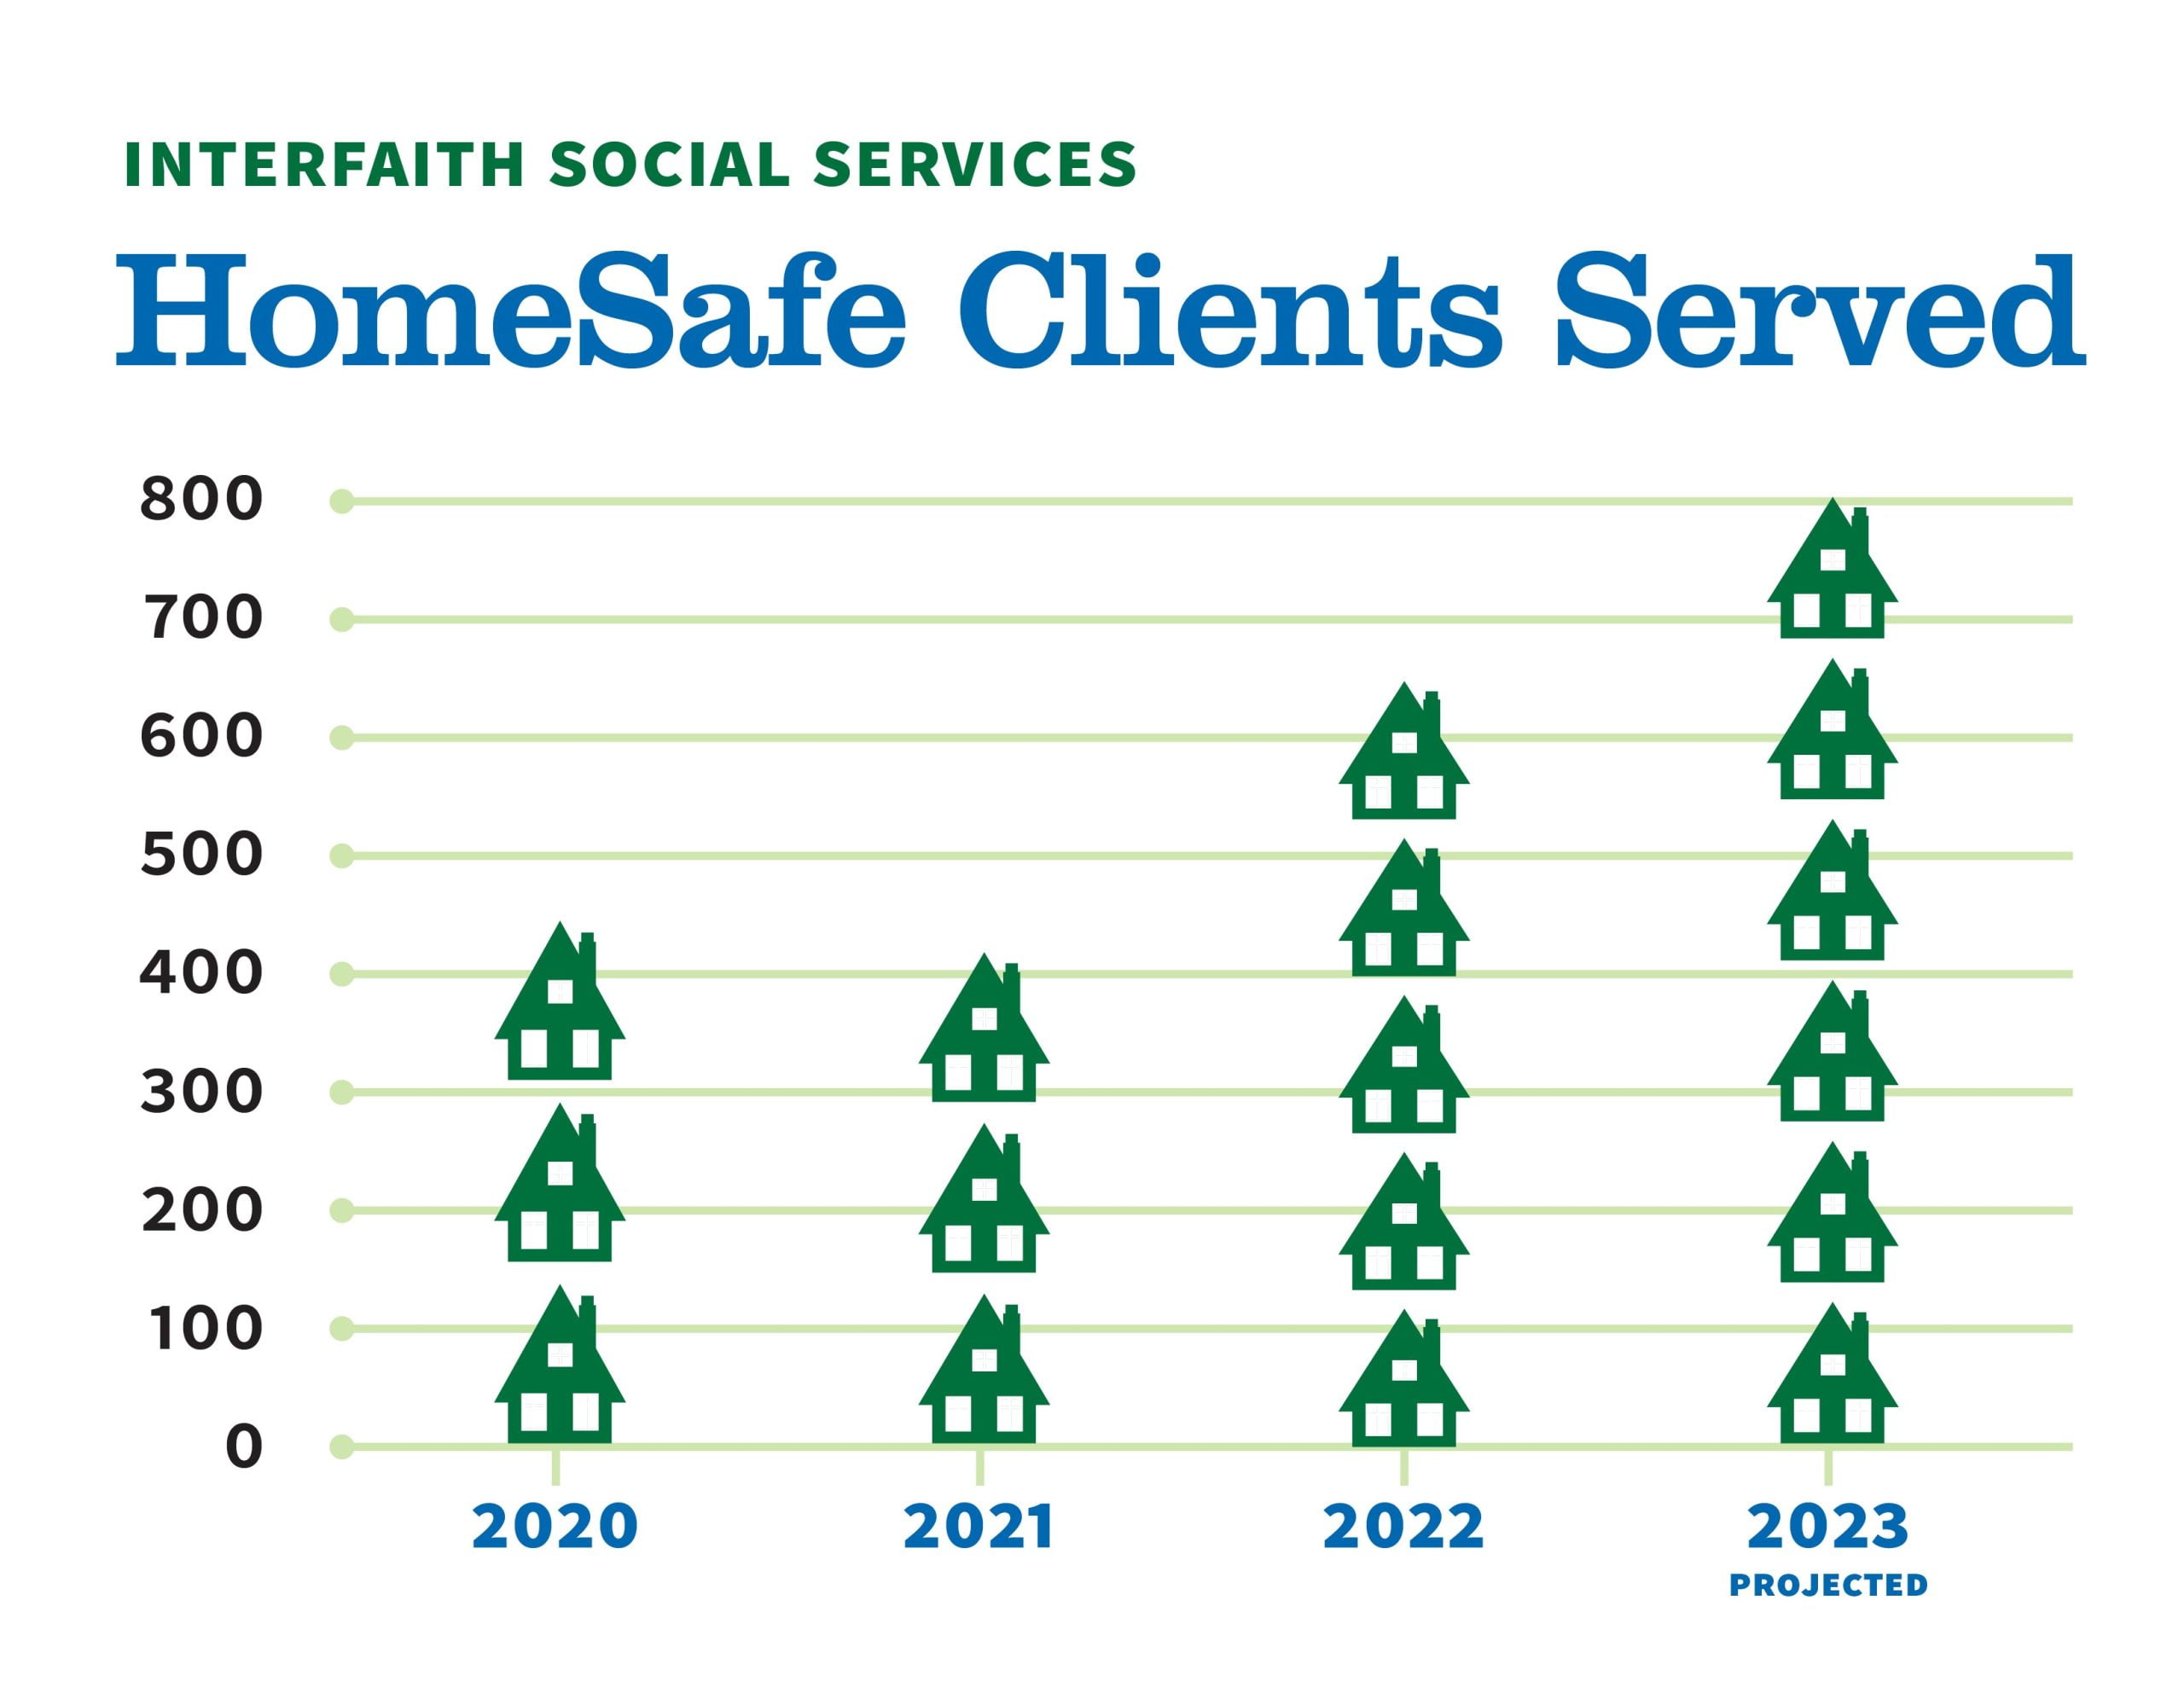 HomeSafe Clients Served bar graph